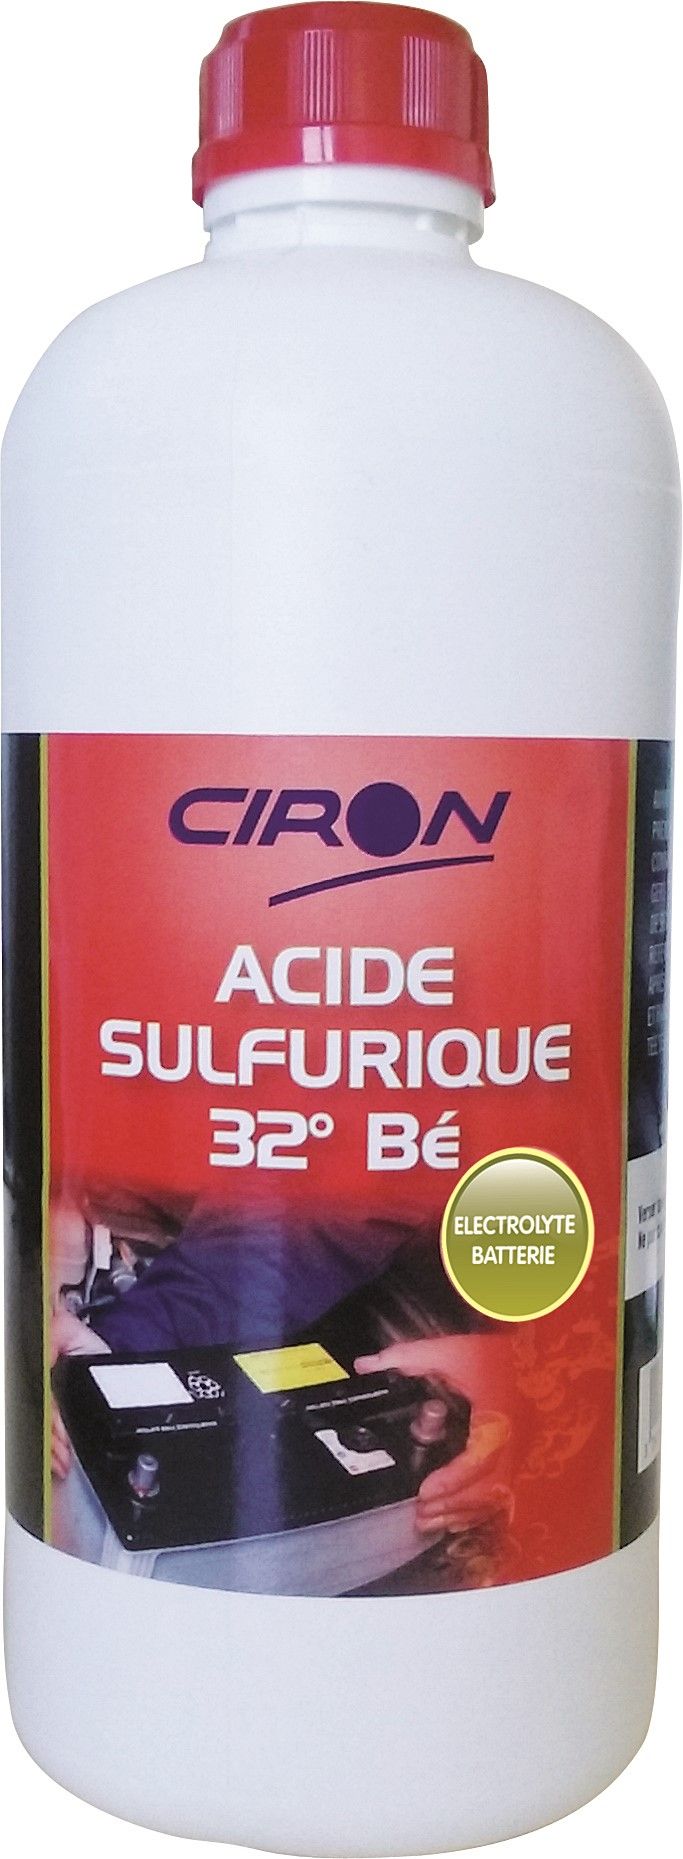 Acide sulfurique 32d 1l - Mr.Bricolage